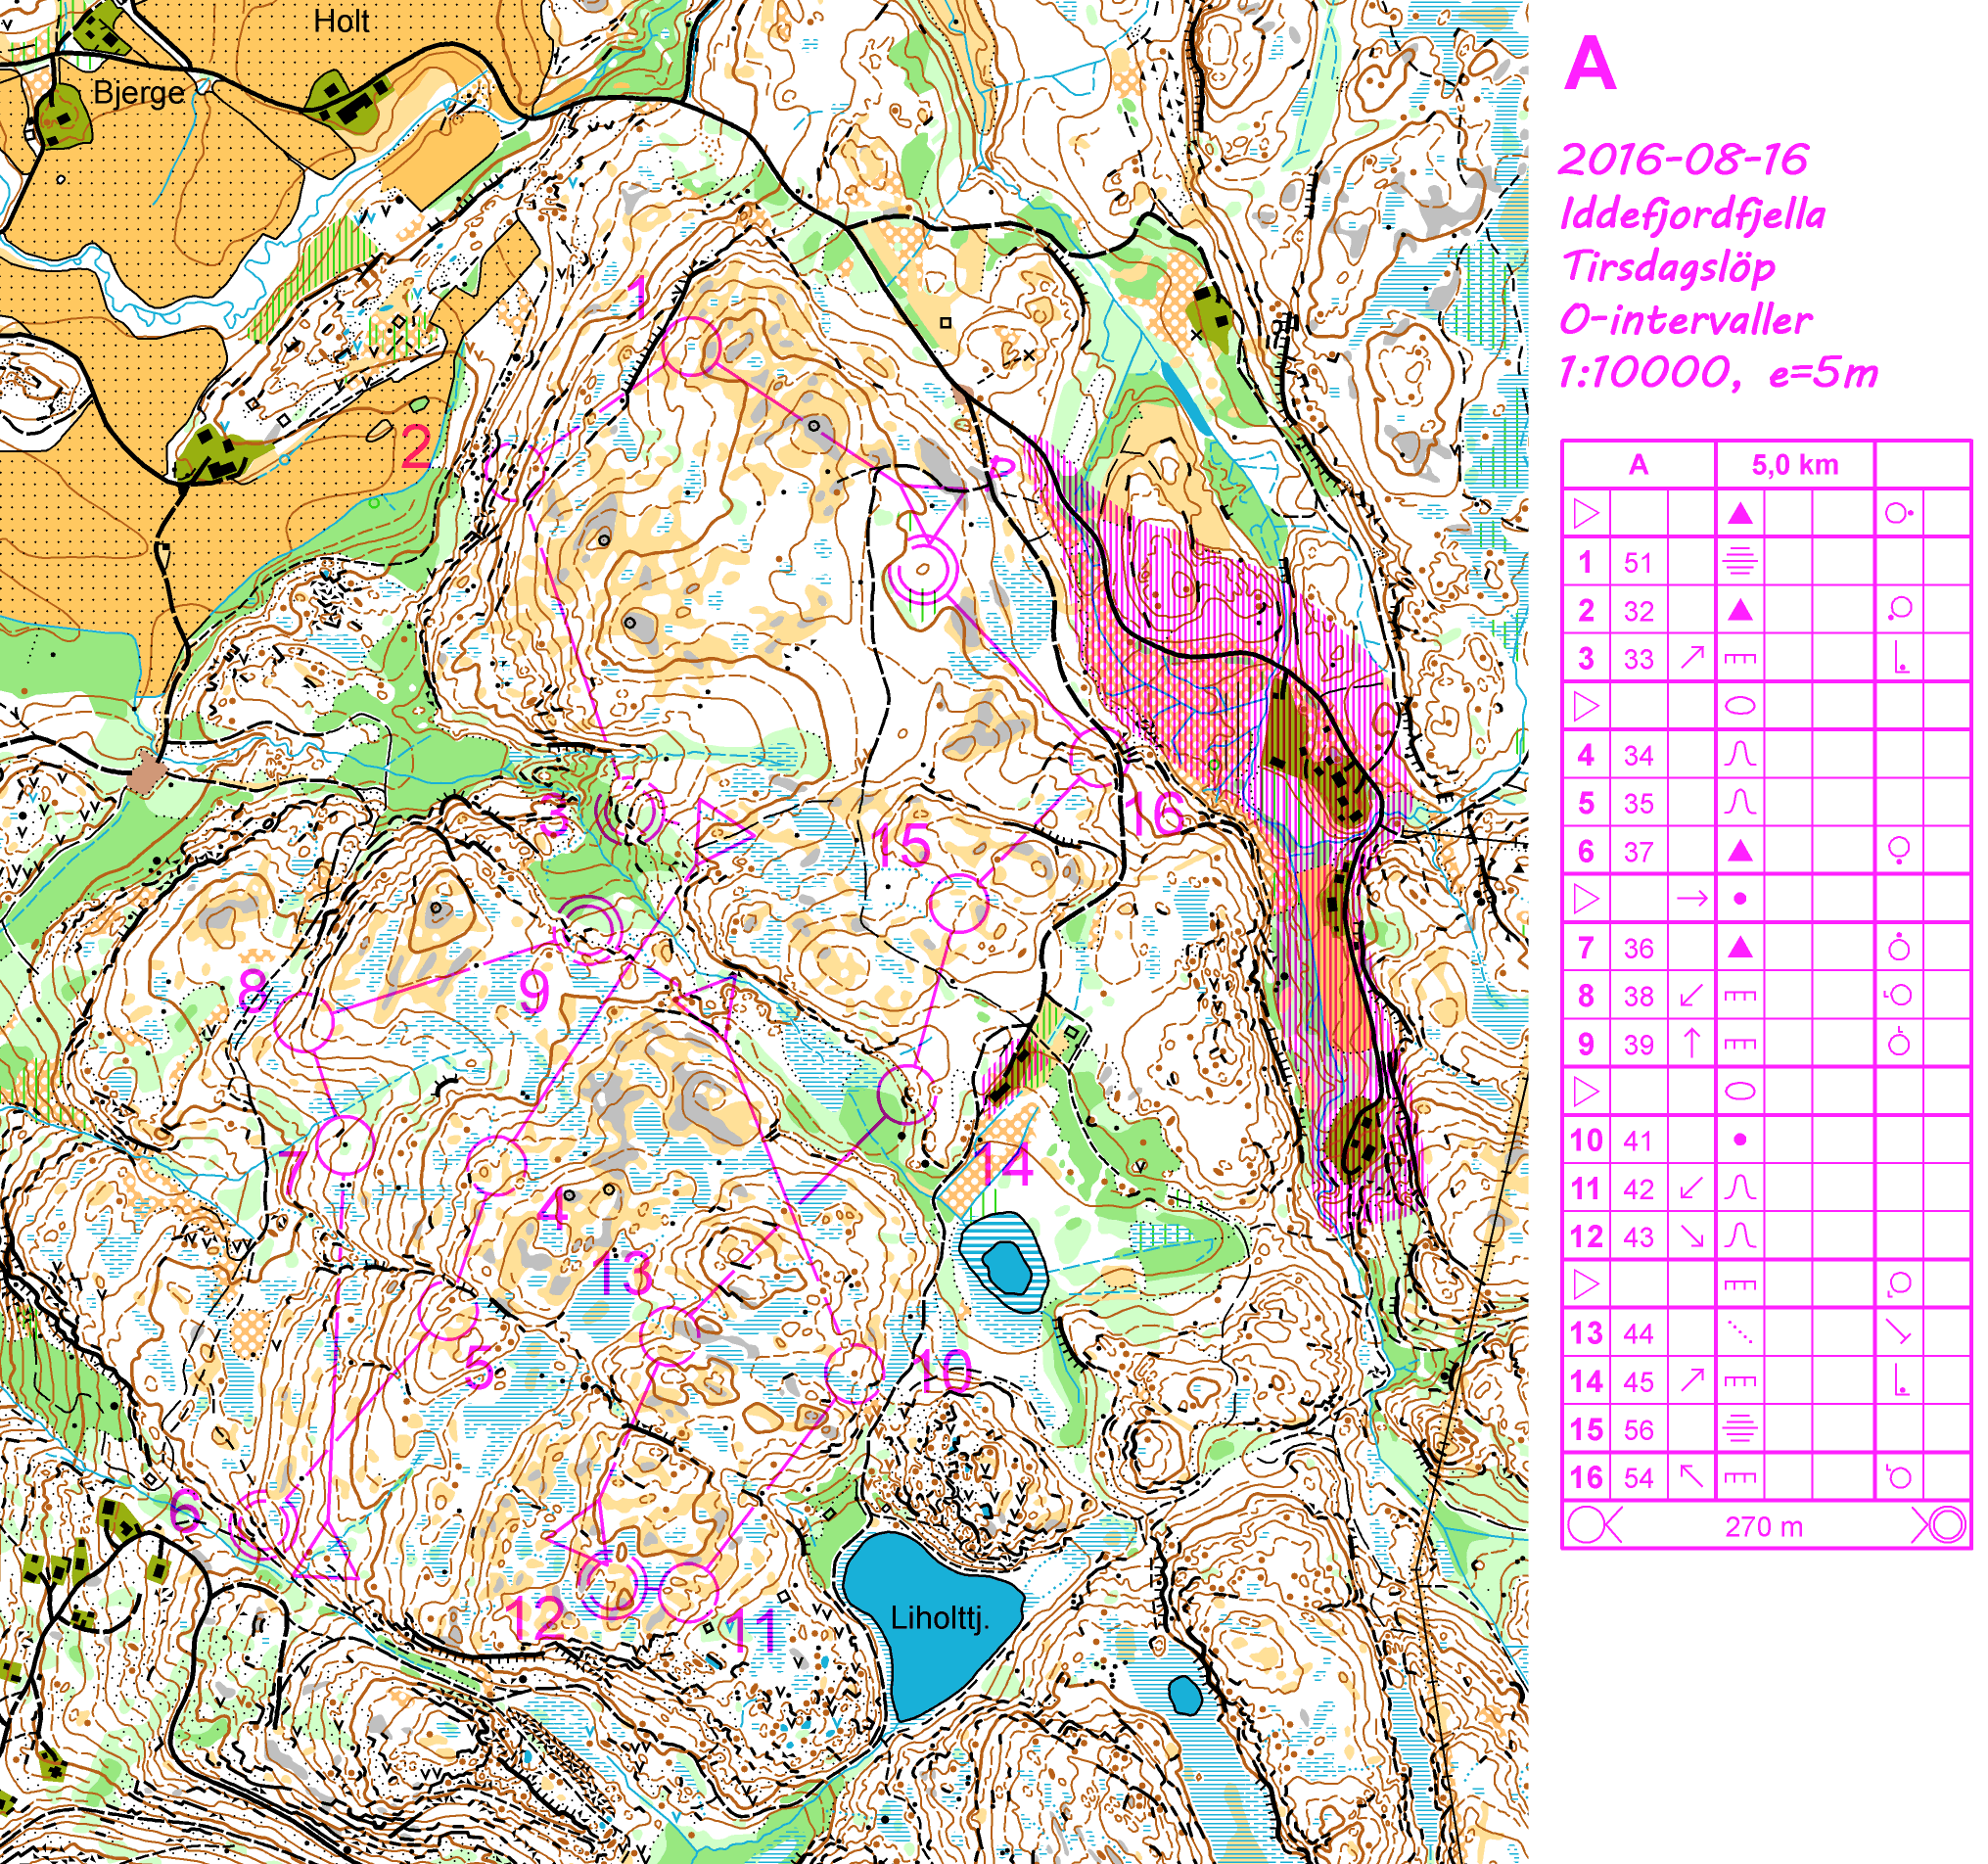 Tirsdagsløp iddefjordfjella (2016-08-15)